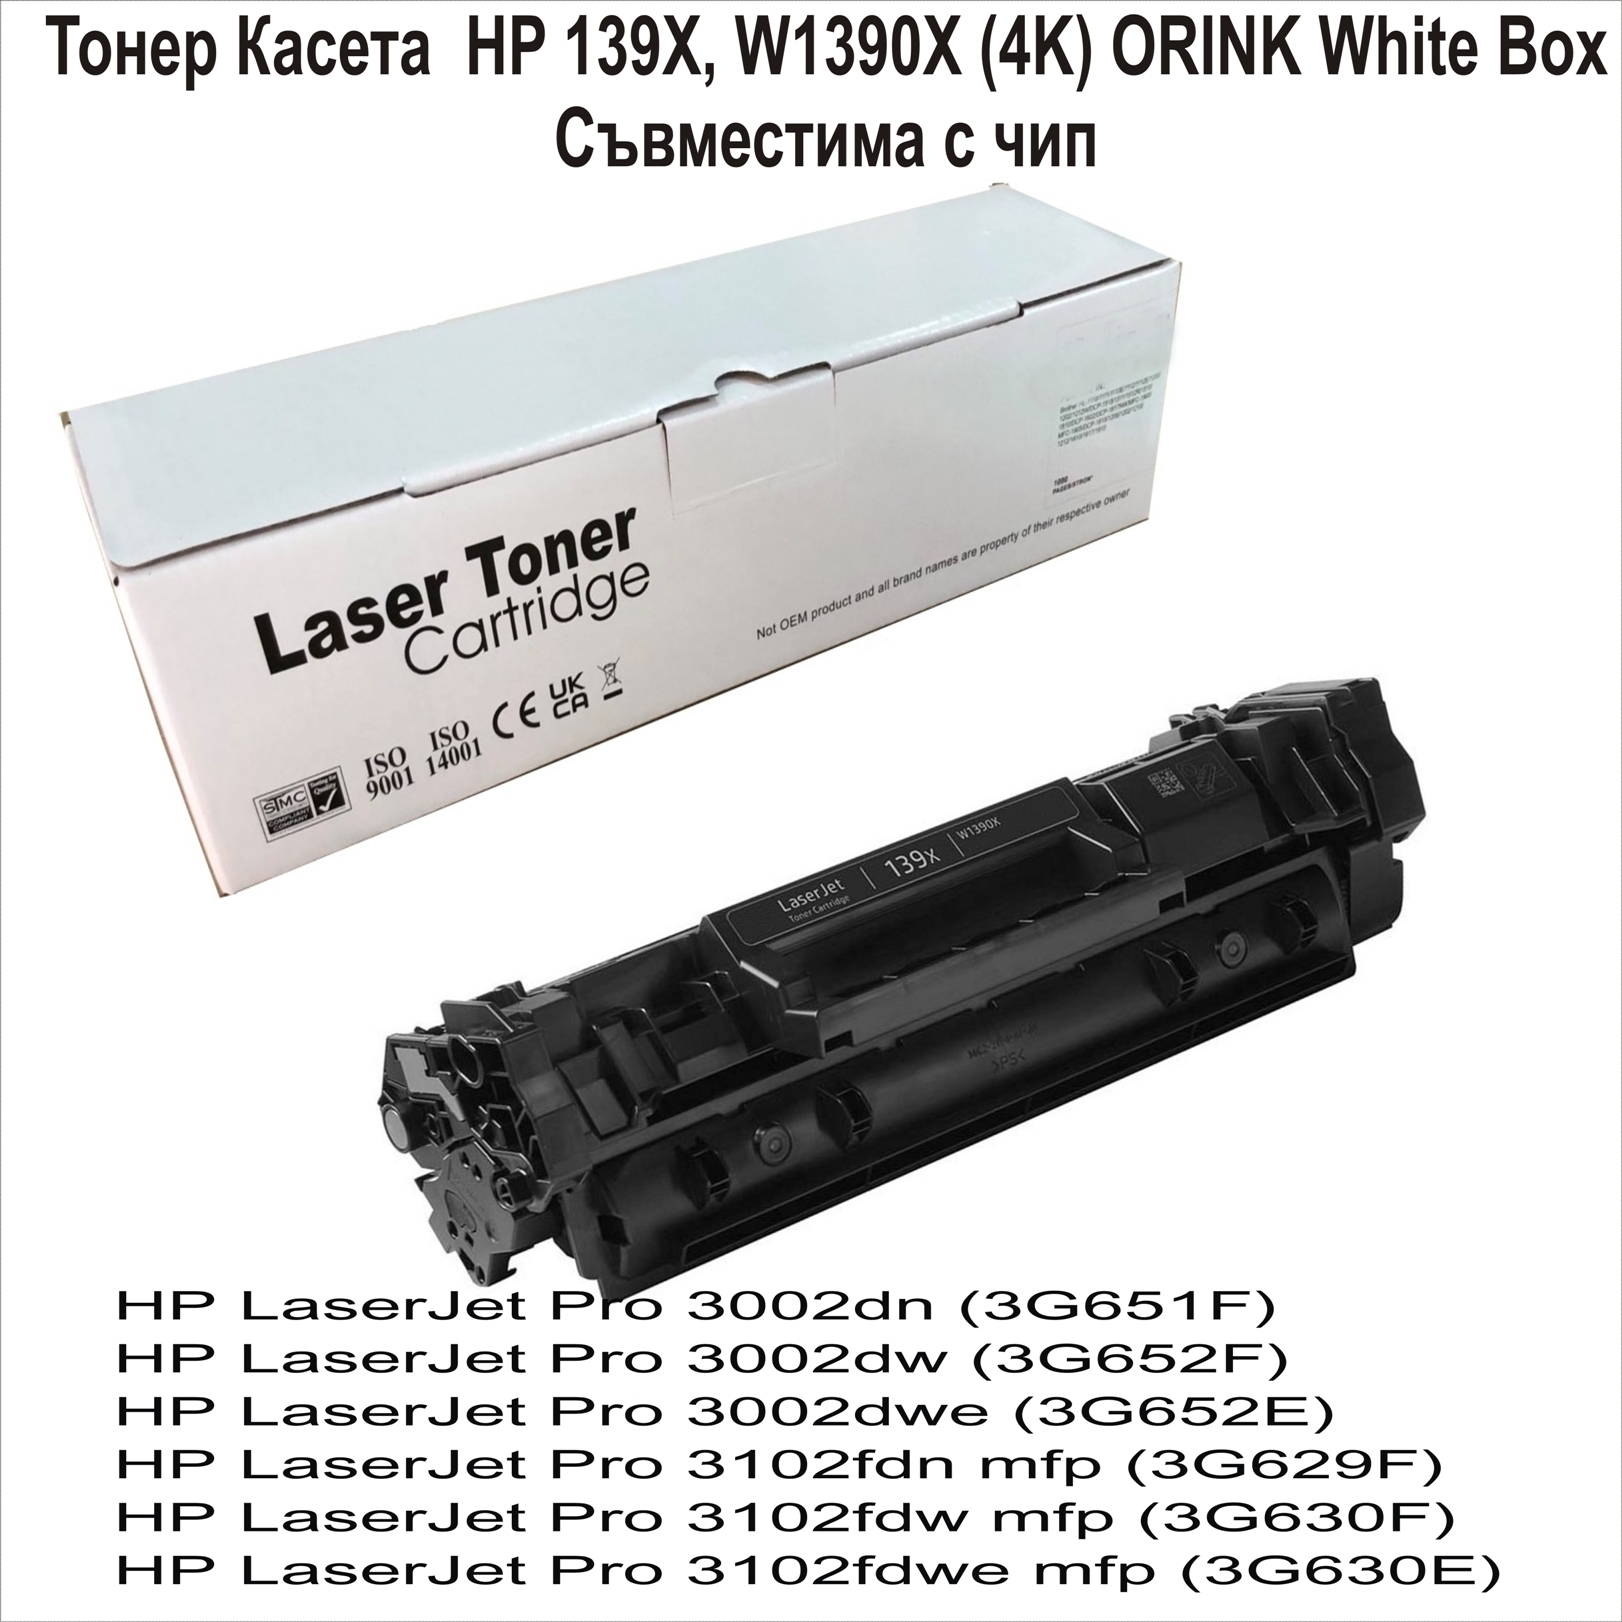 HP 139X, W1390X (4K) ORINK White Box